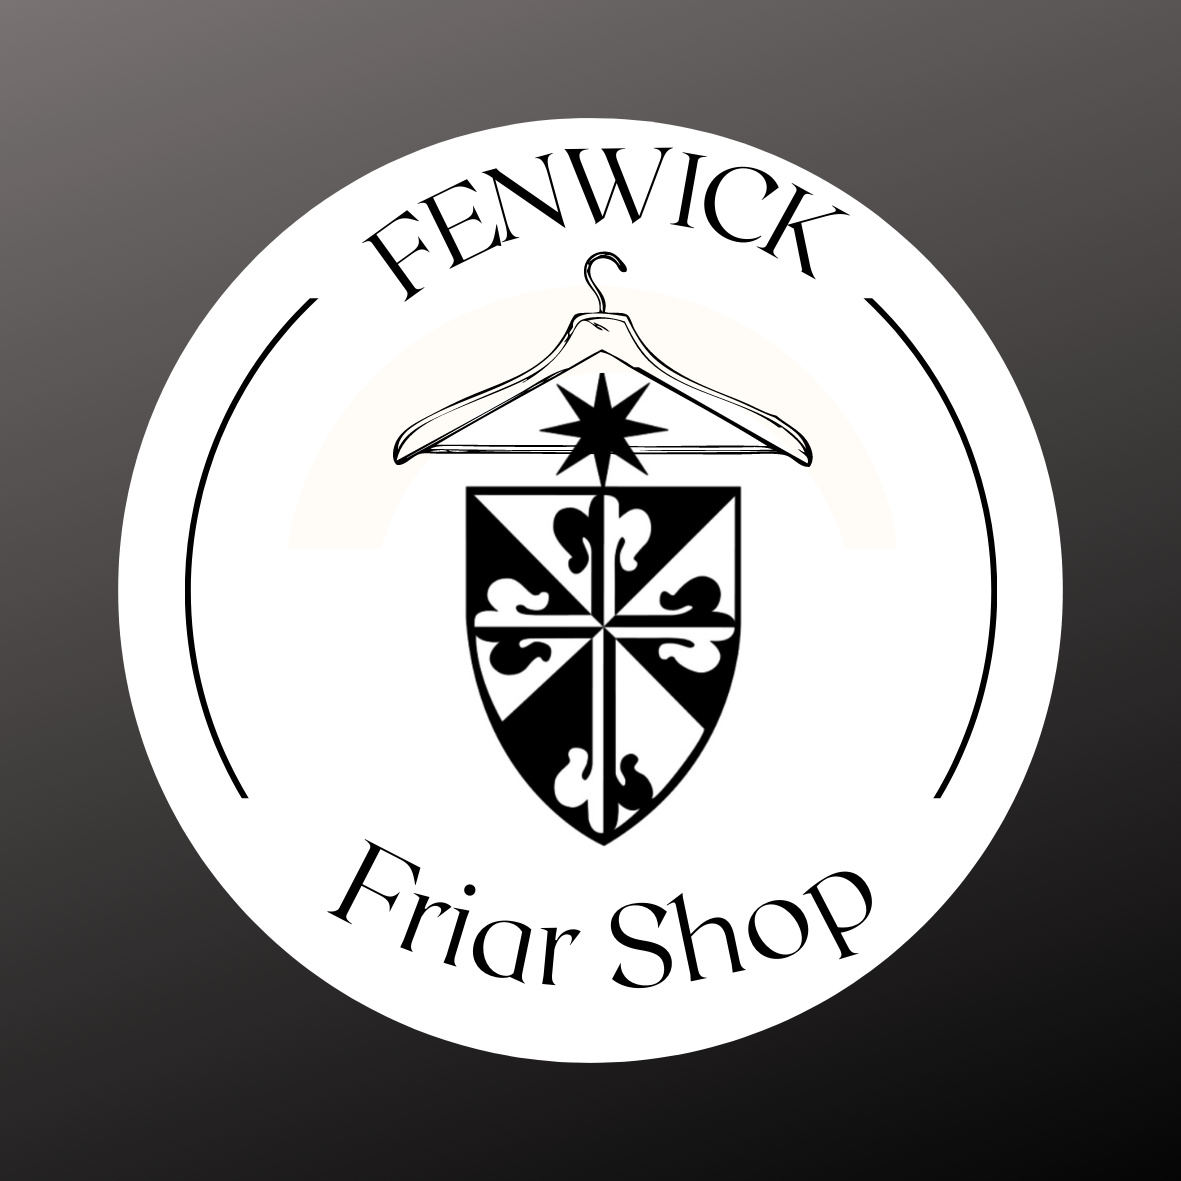 The Friar Shop – Fenwick Friar Shop